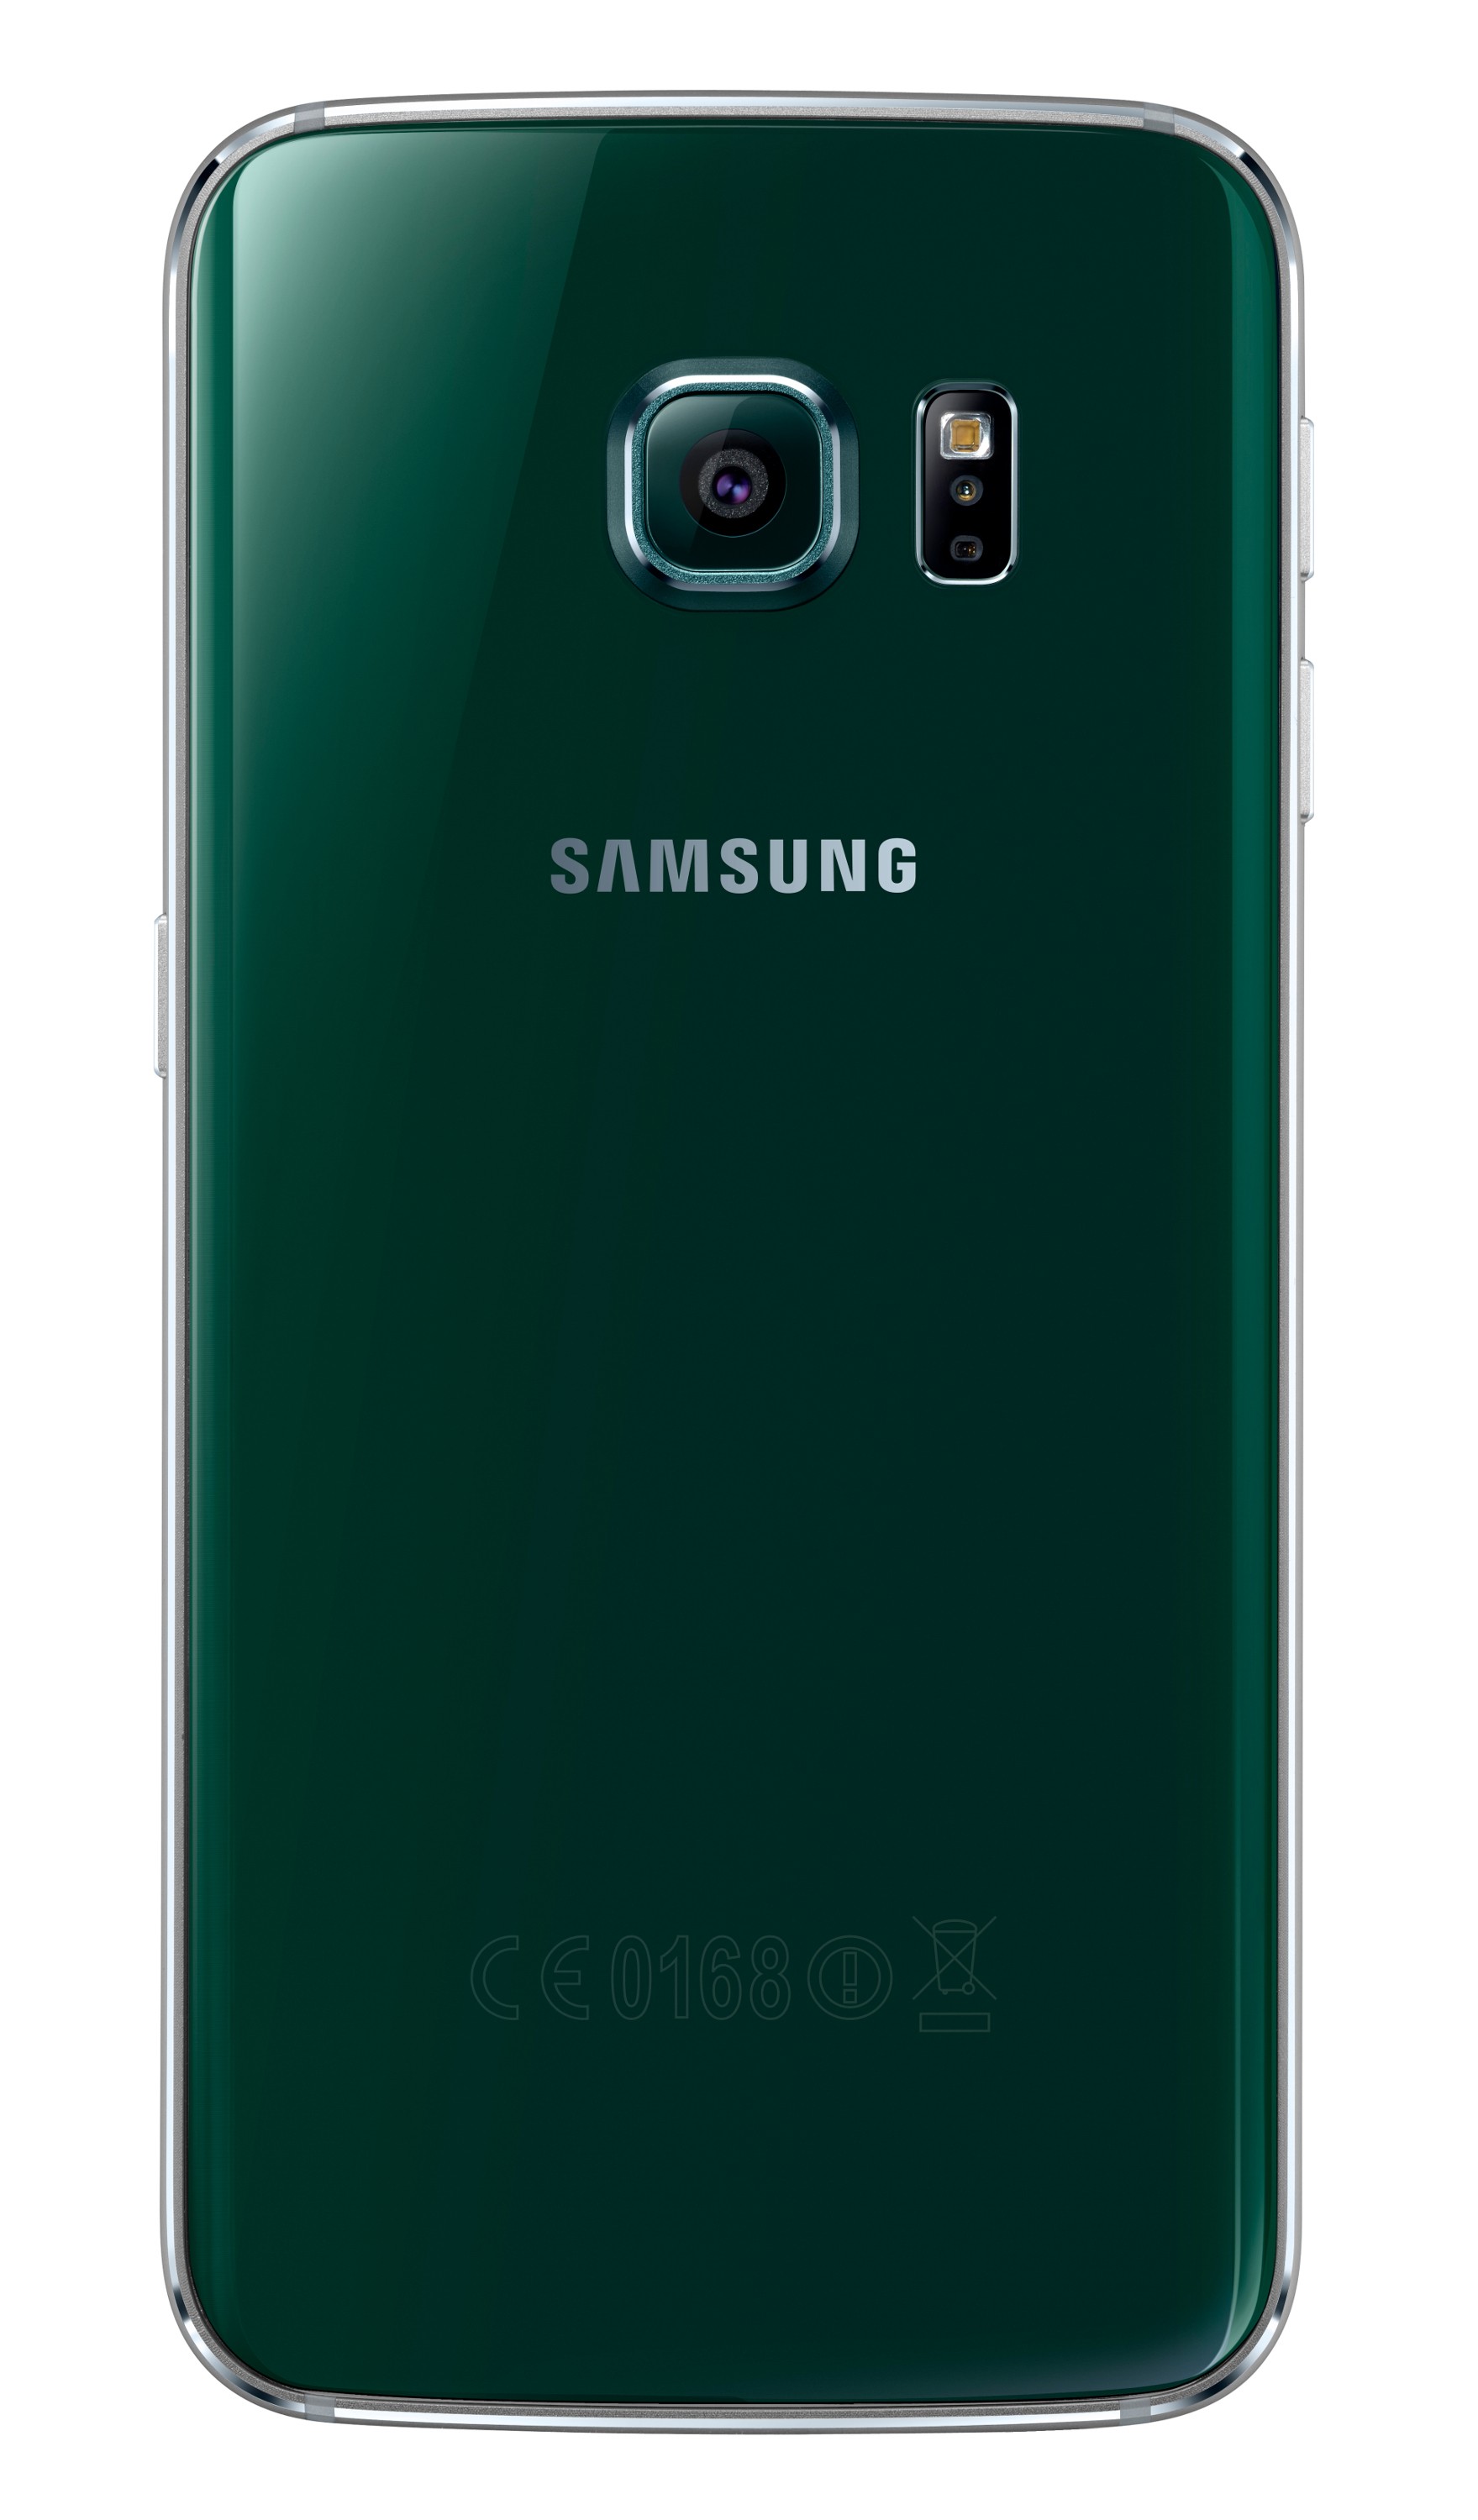 Samsung Galaxy S6 Edge Full Specs Rundown